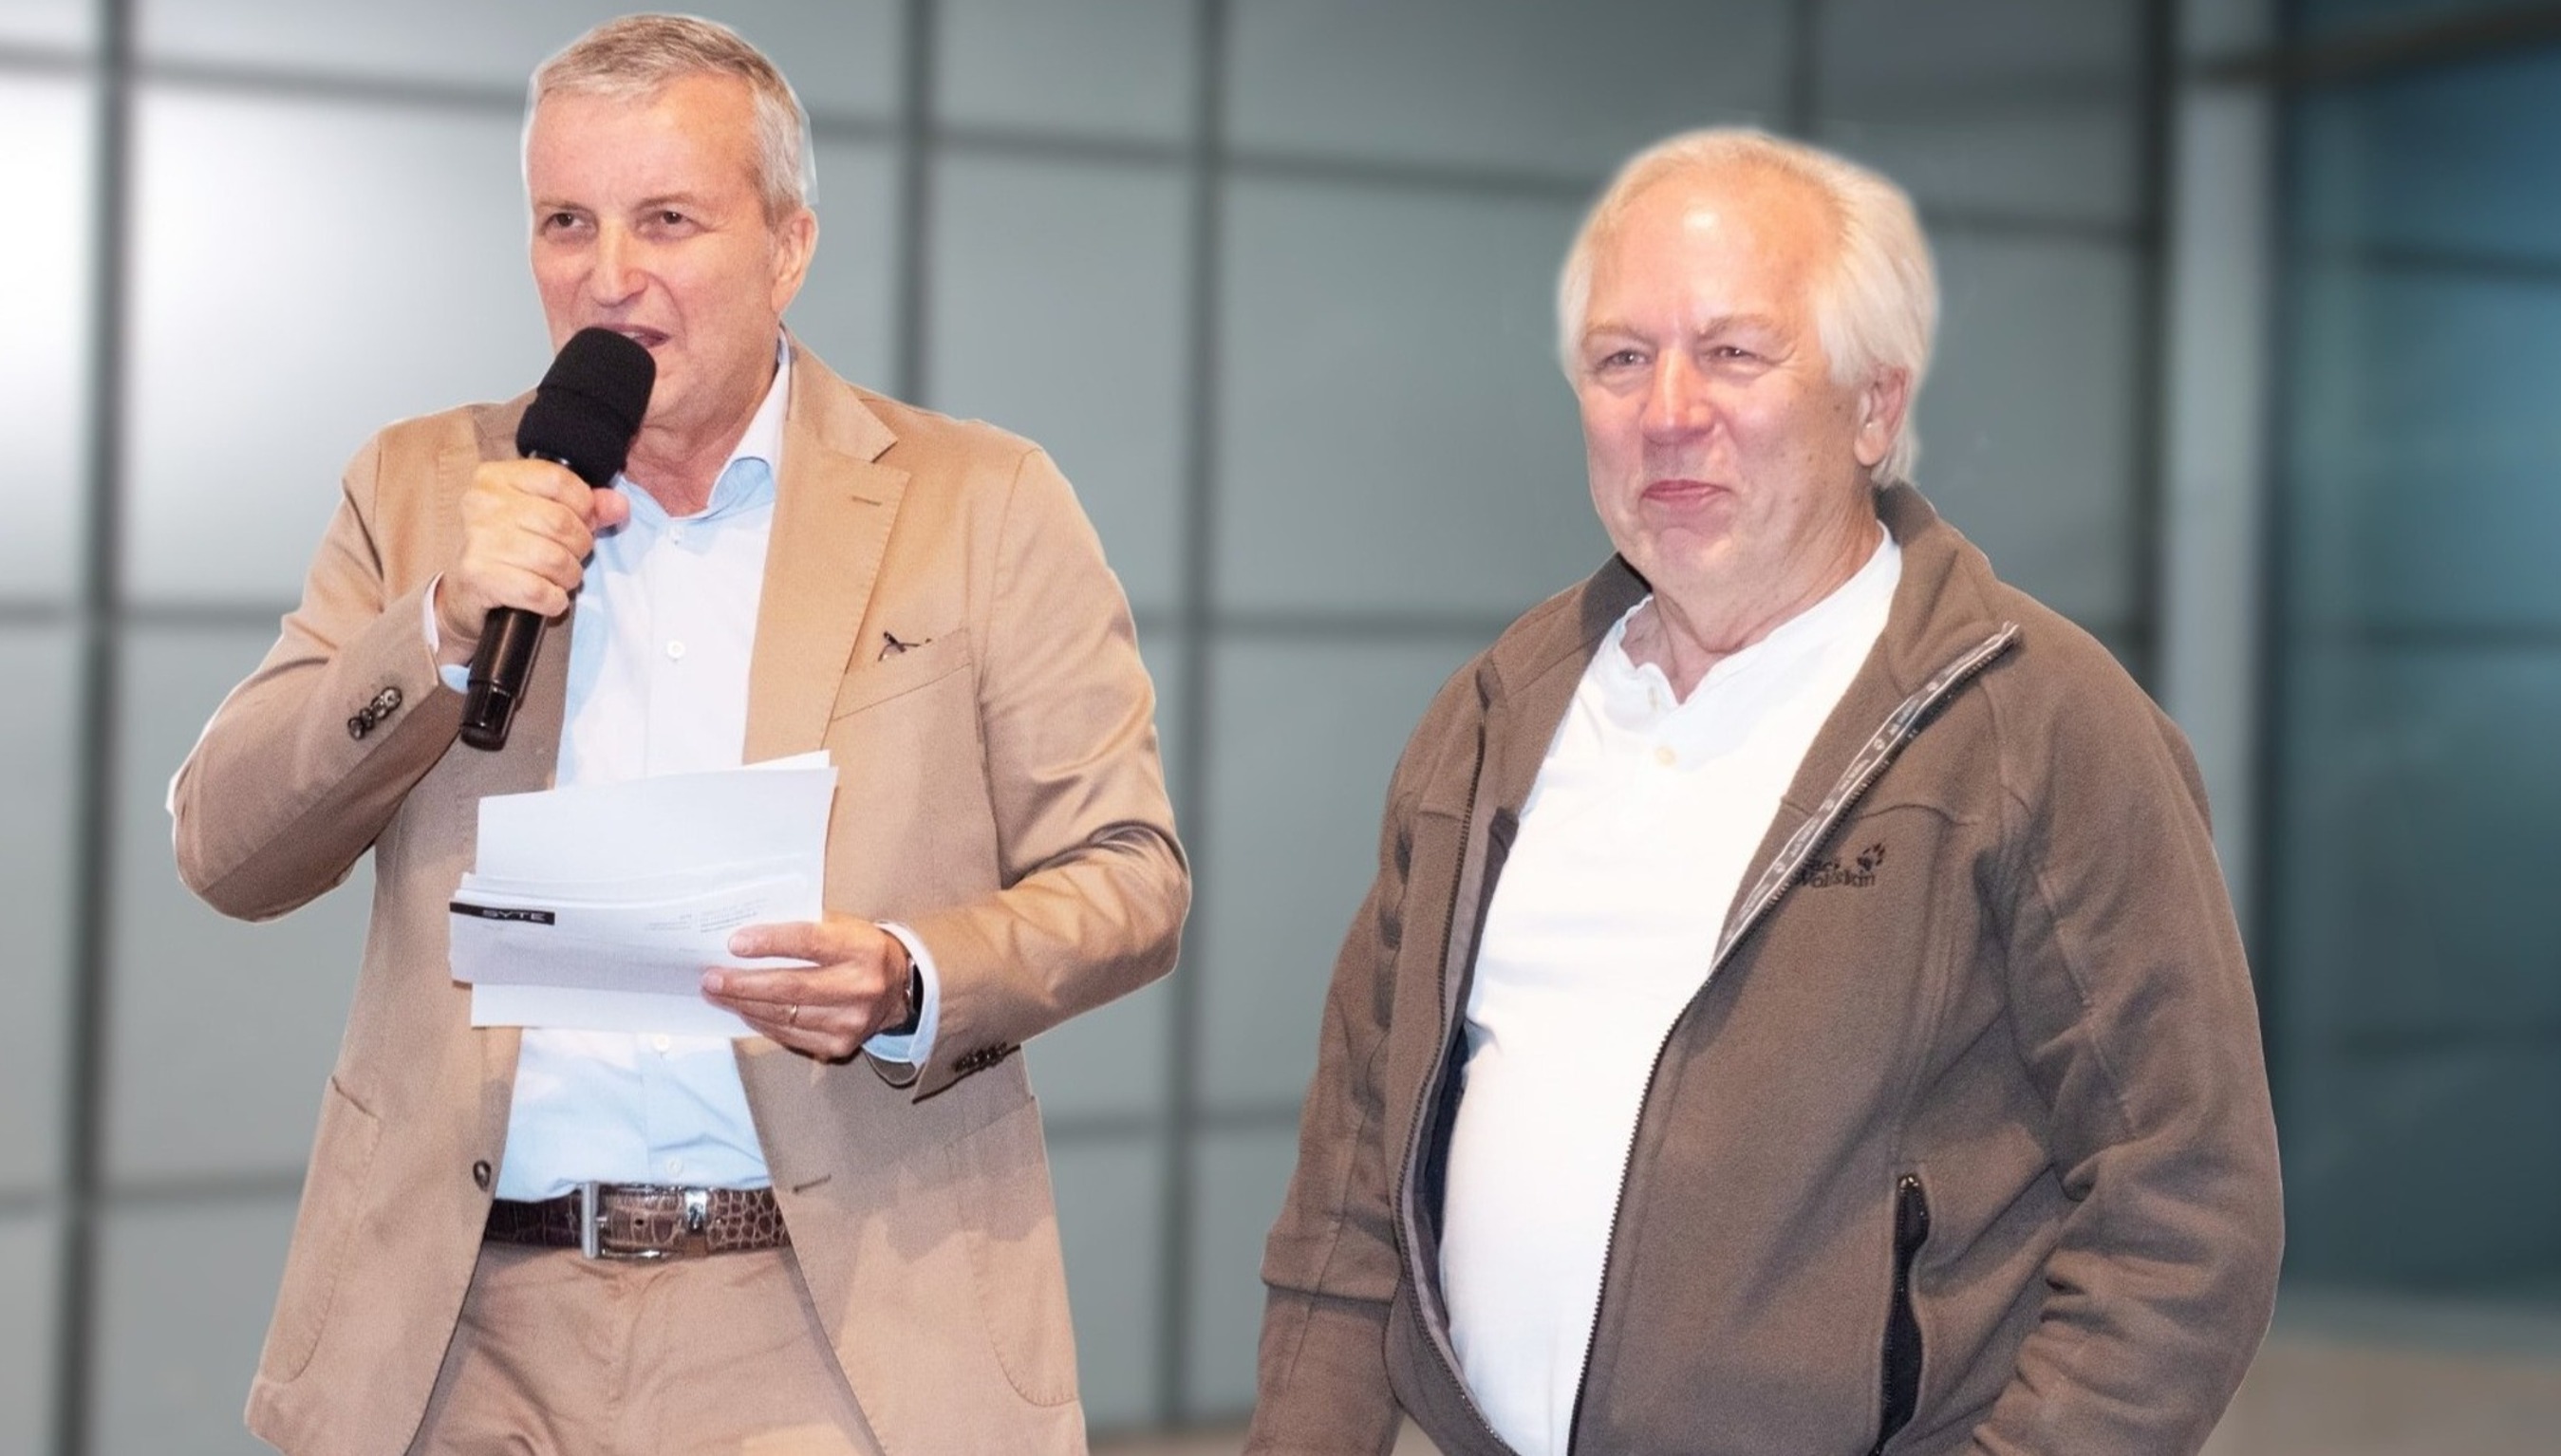 Wilfried Kentsch retires after 54 years at ARKU